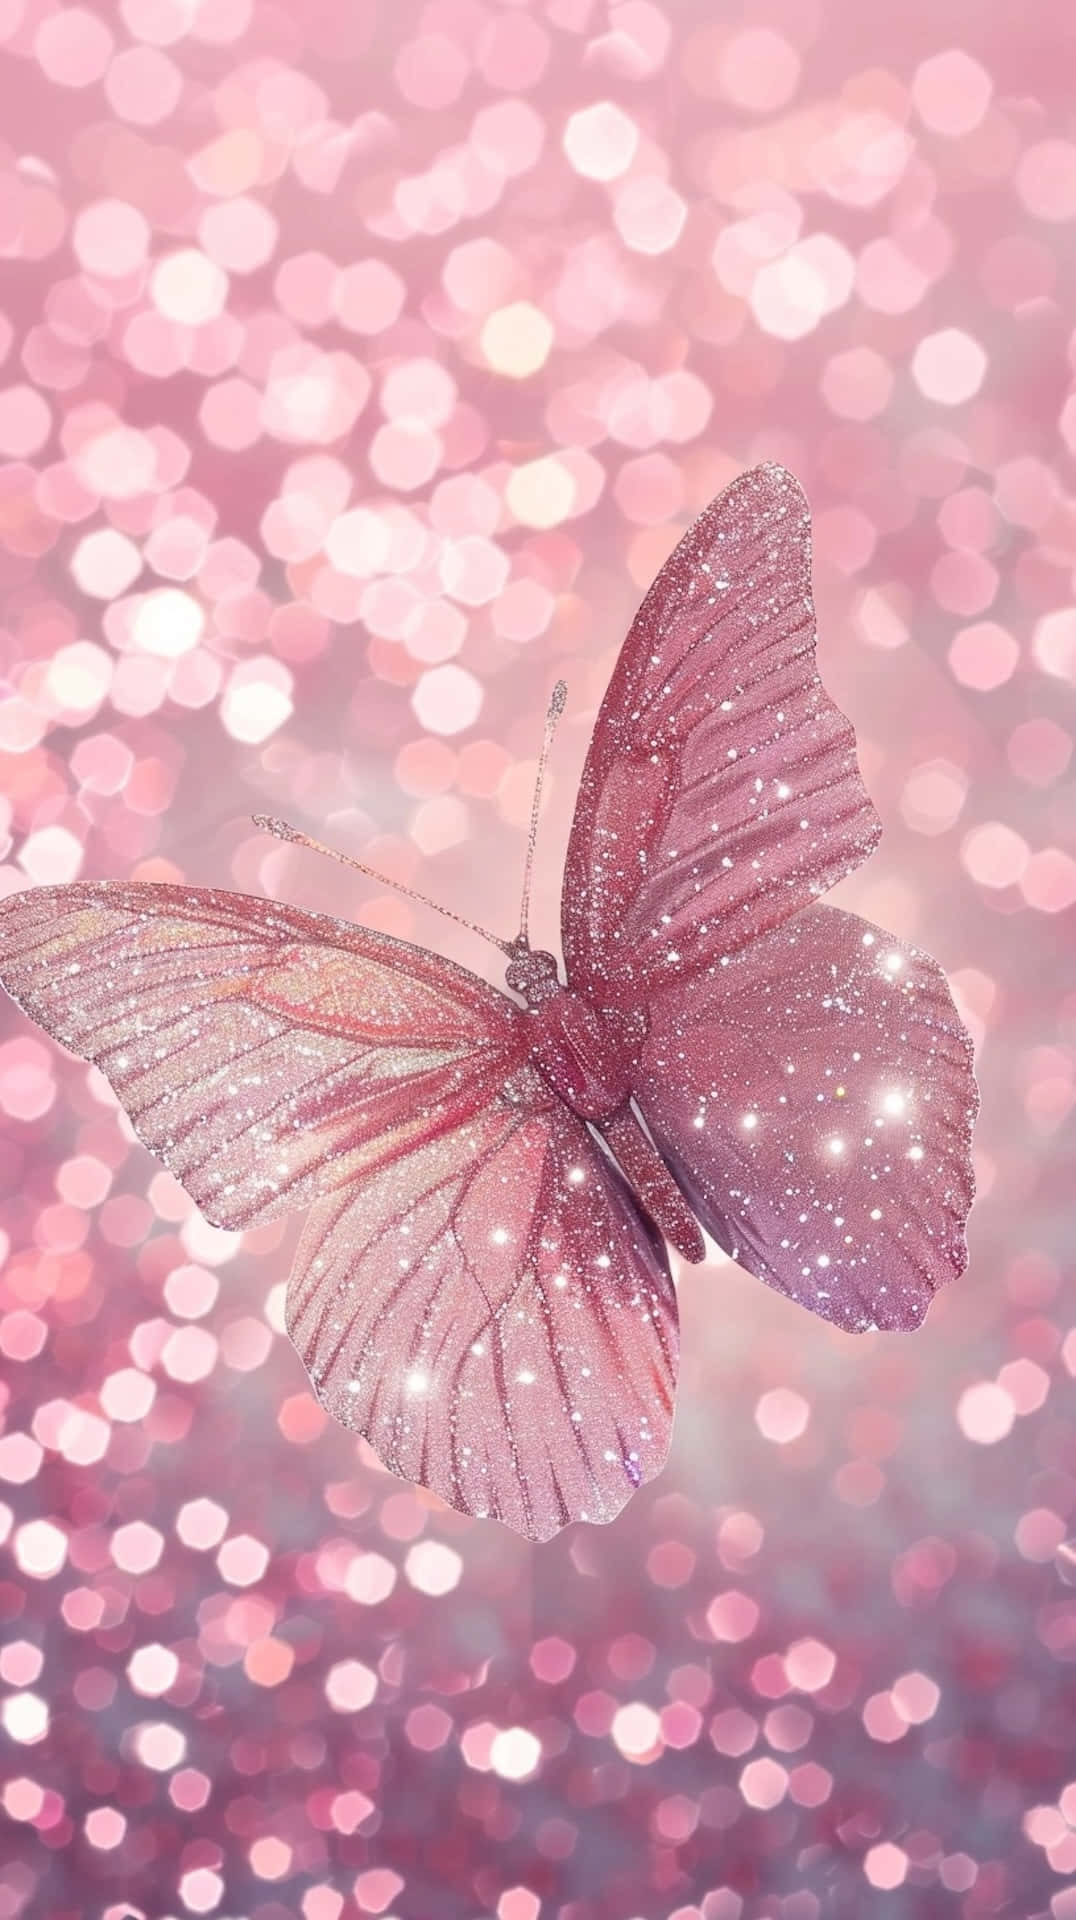 Sparkling Pink Butterfly Bokeh Background Wallpaper